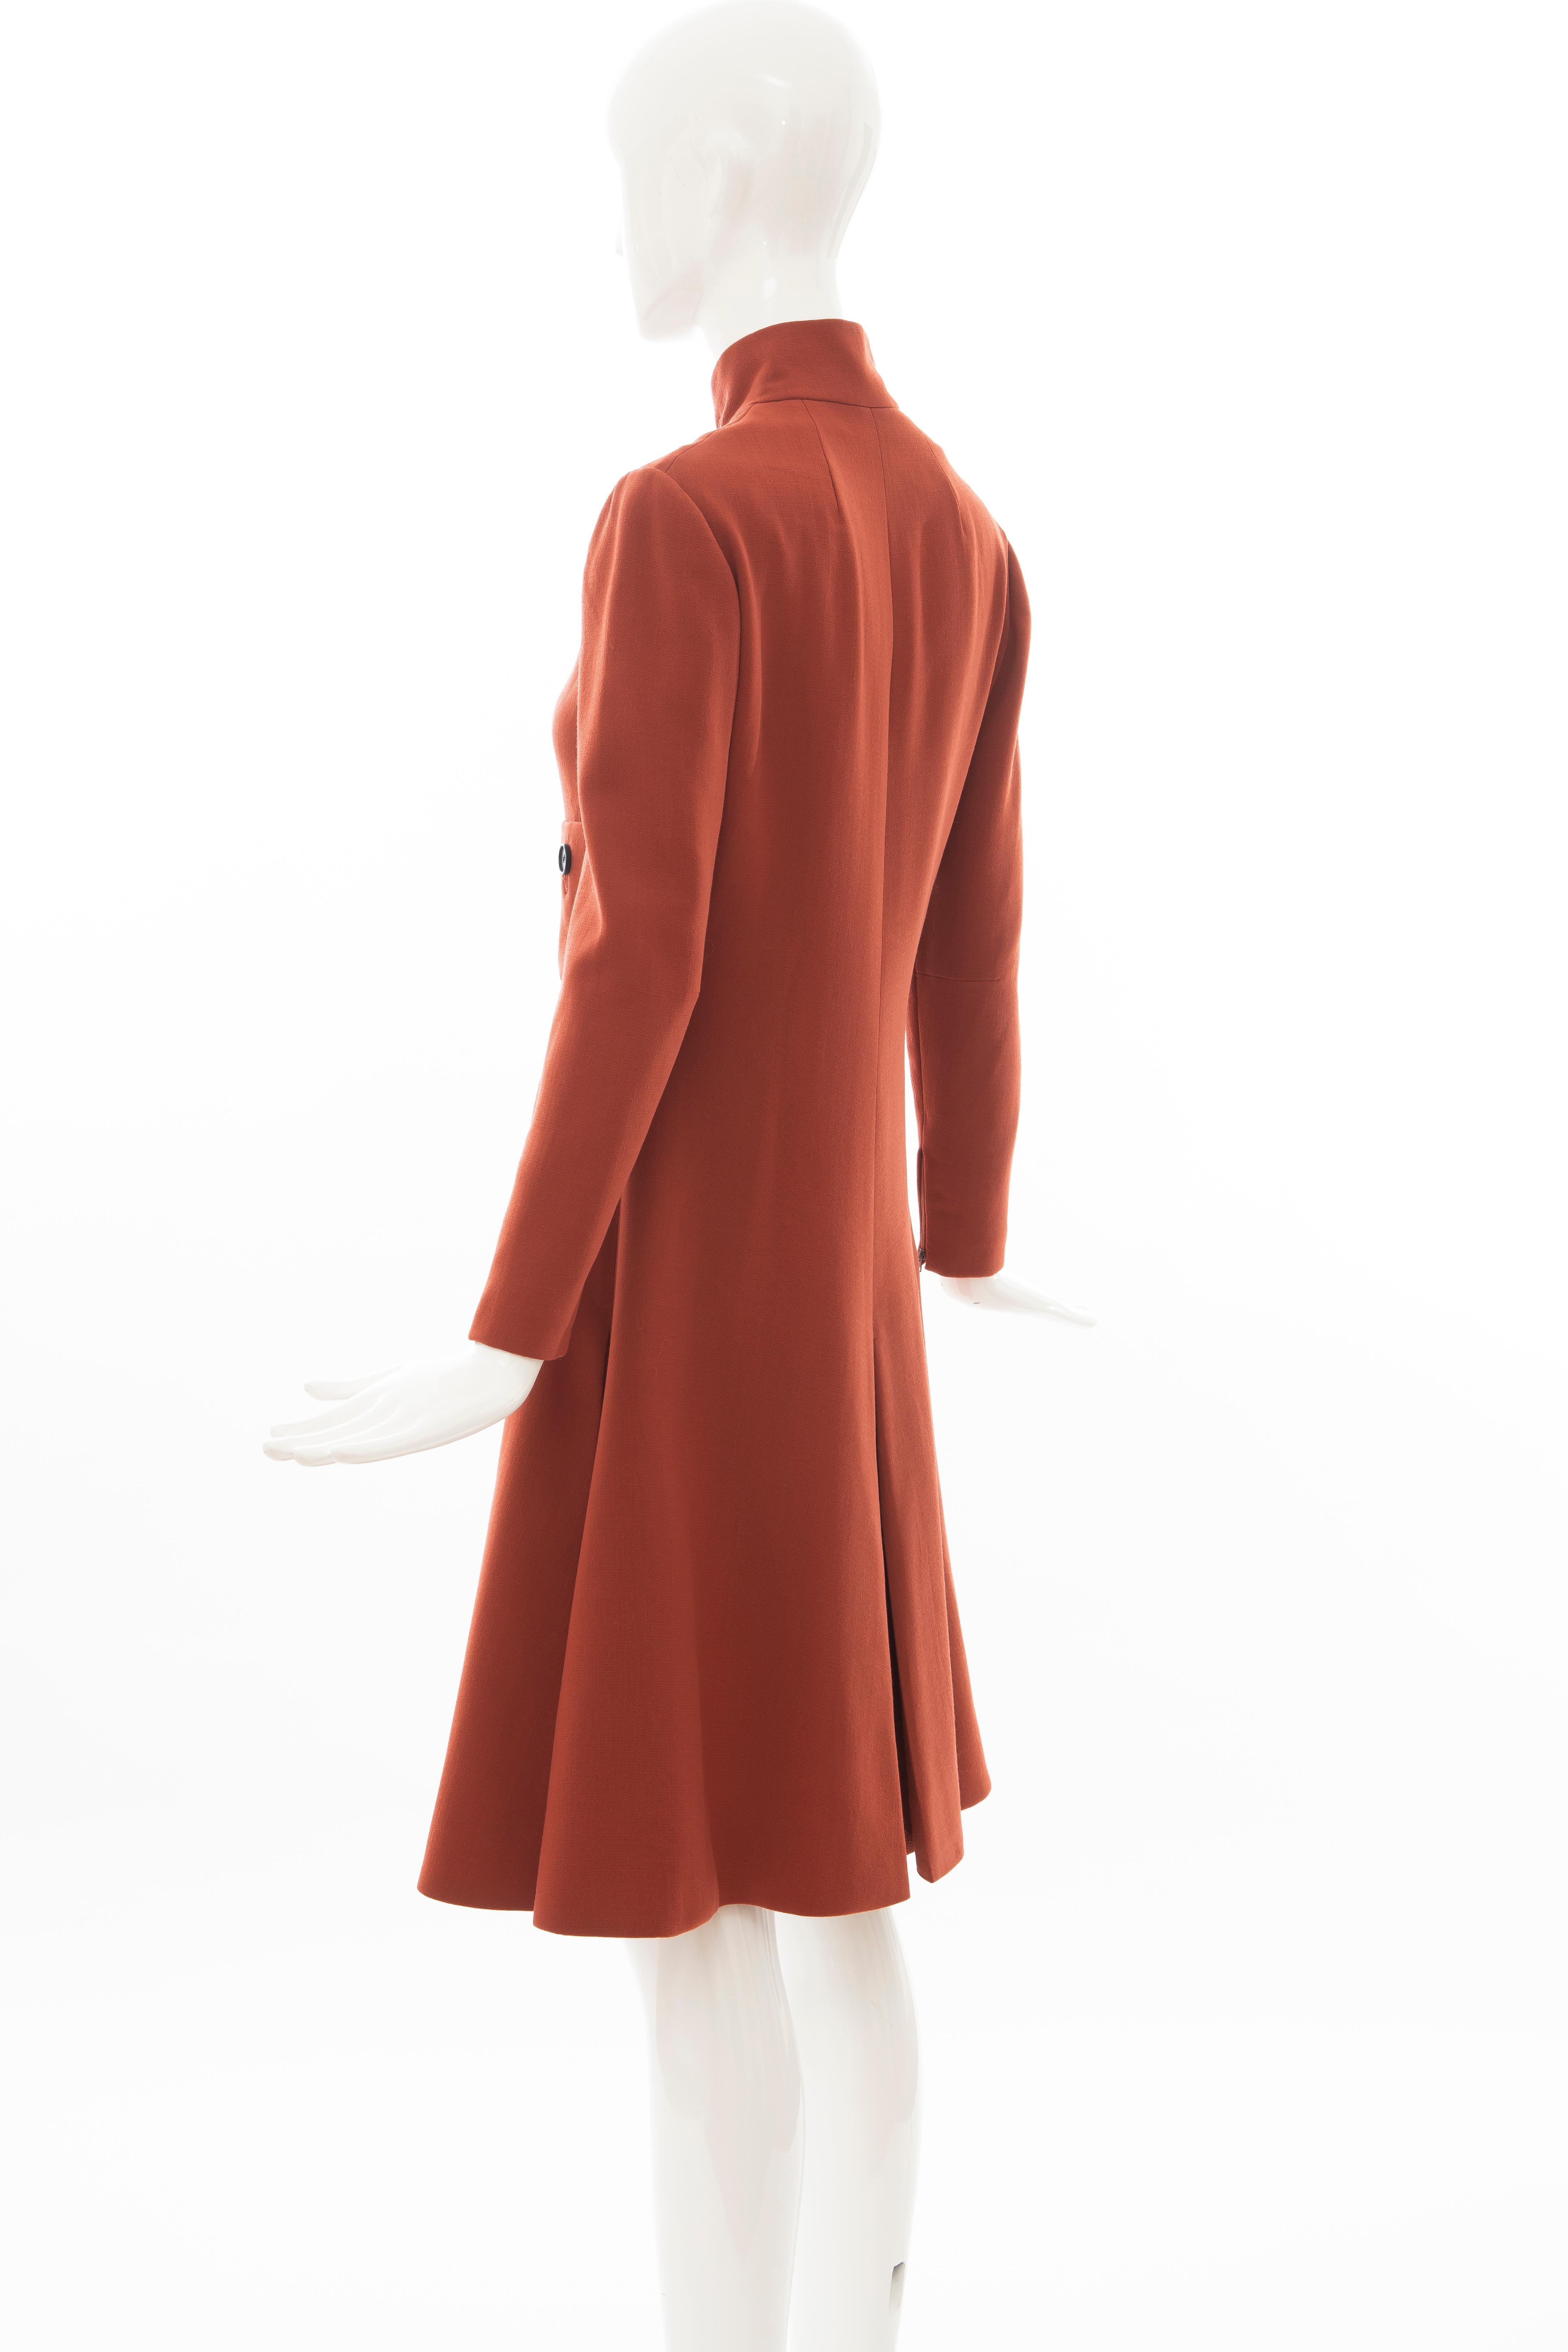 Geoffrey Beene Cinnamon Wool Crepe Princess Cut Dress, Circa: 1960's For Sale 1